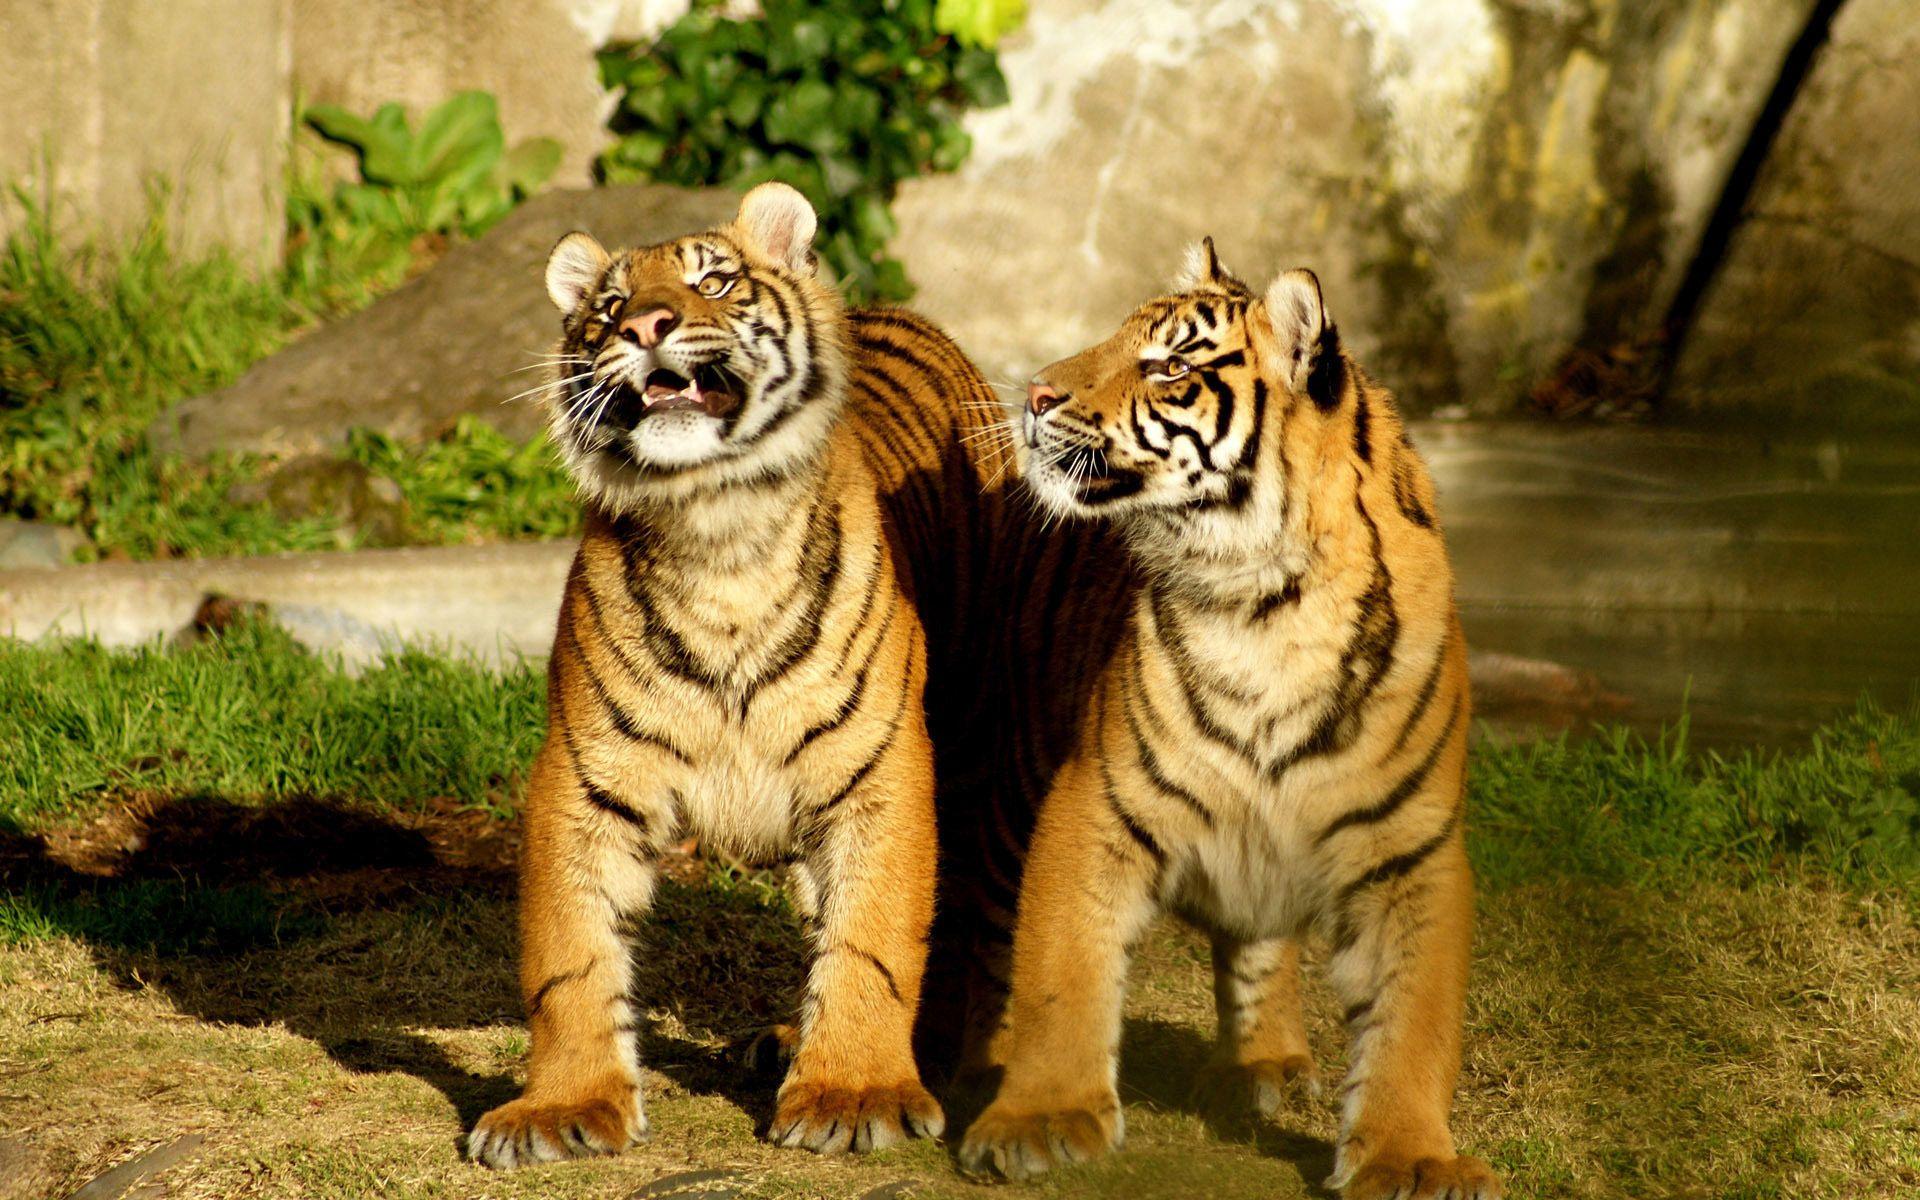 Cute Baby Tiger Image